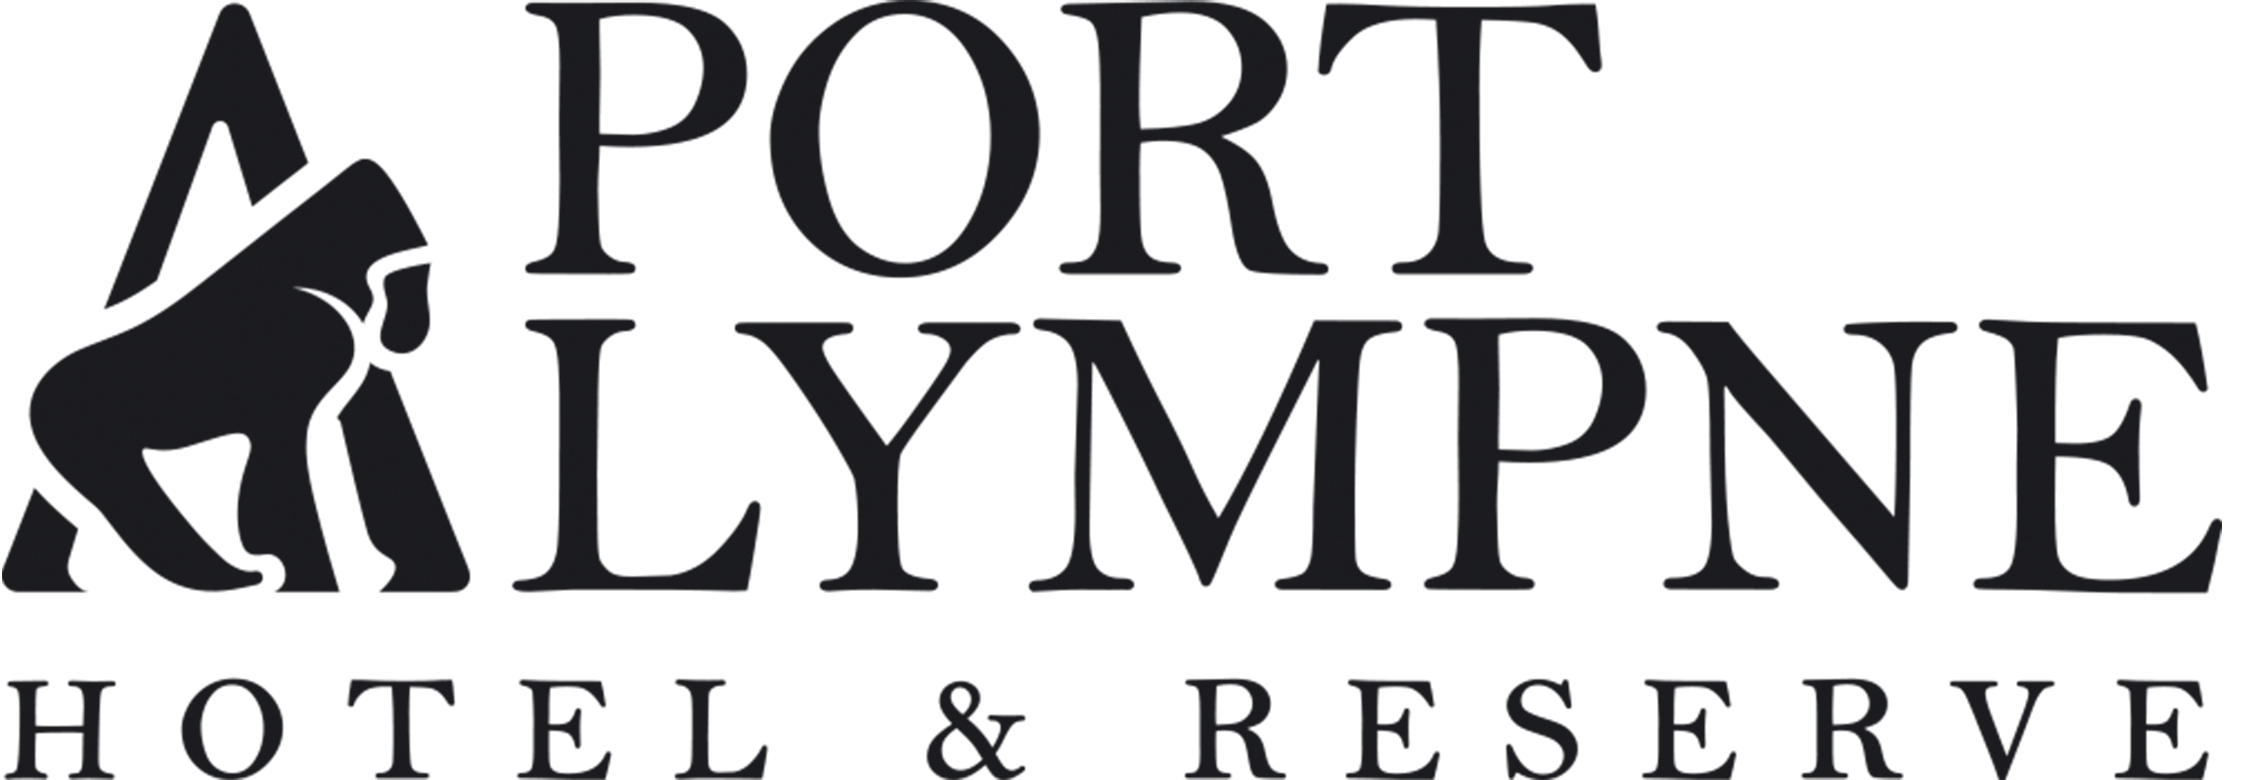 Port Lympne logo